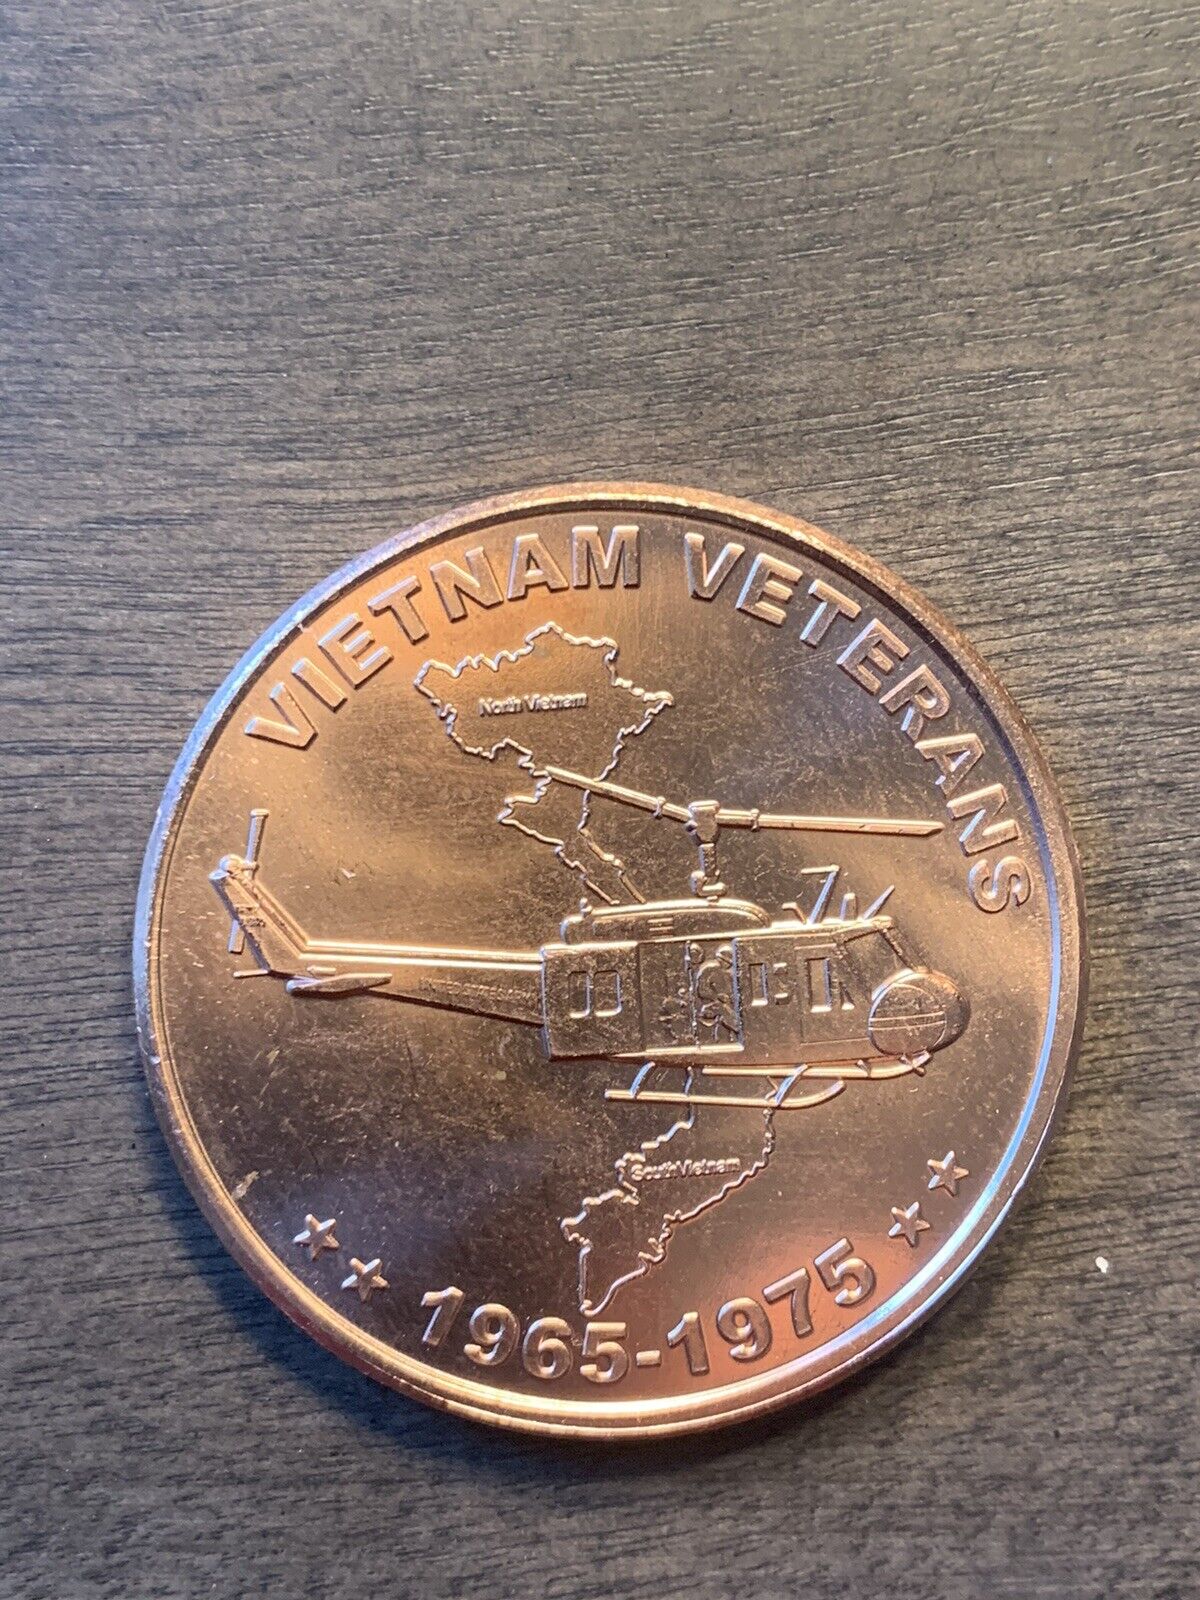 Vietnam Veterans Coin 1965-1975 (Copper .999 Fine )